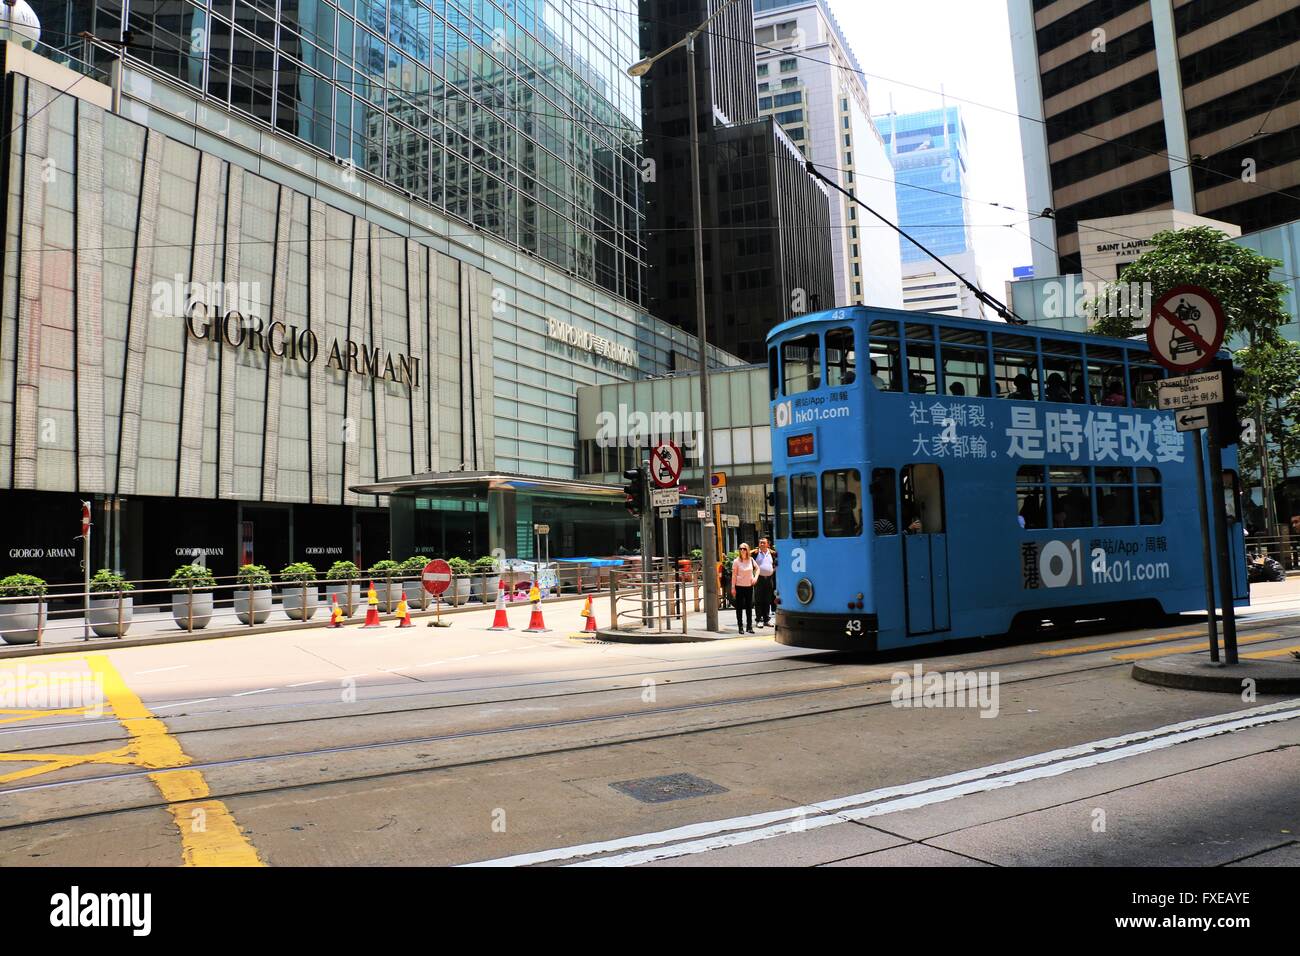 Le tram bleu en face de Giorgio Armani shop dans cetral, hong kong. Banque D'Images